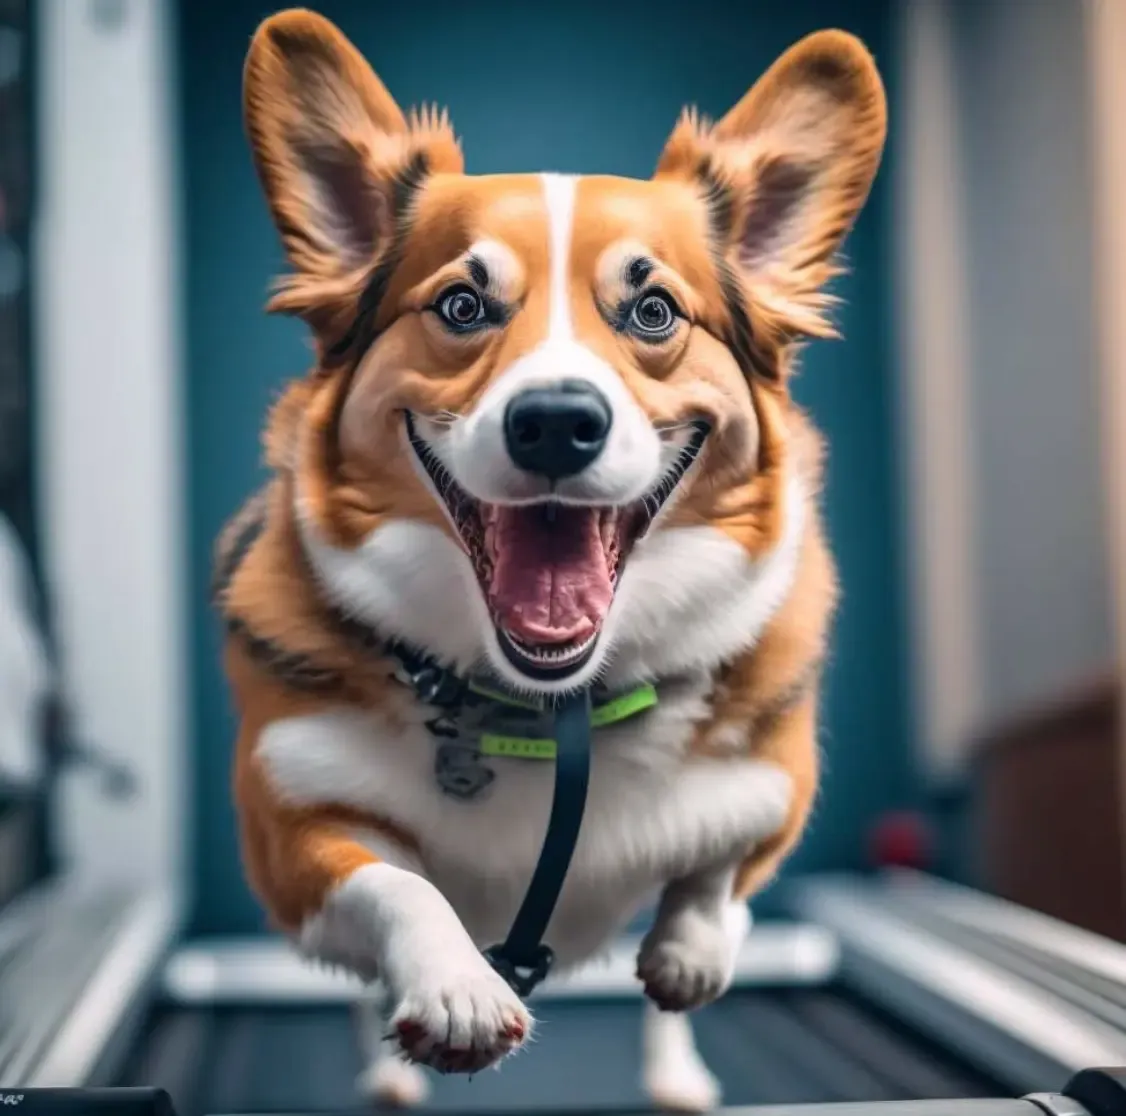 Dog Treadmill - Why would a dog need a treadmill?